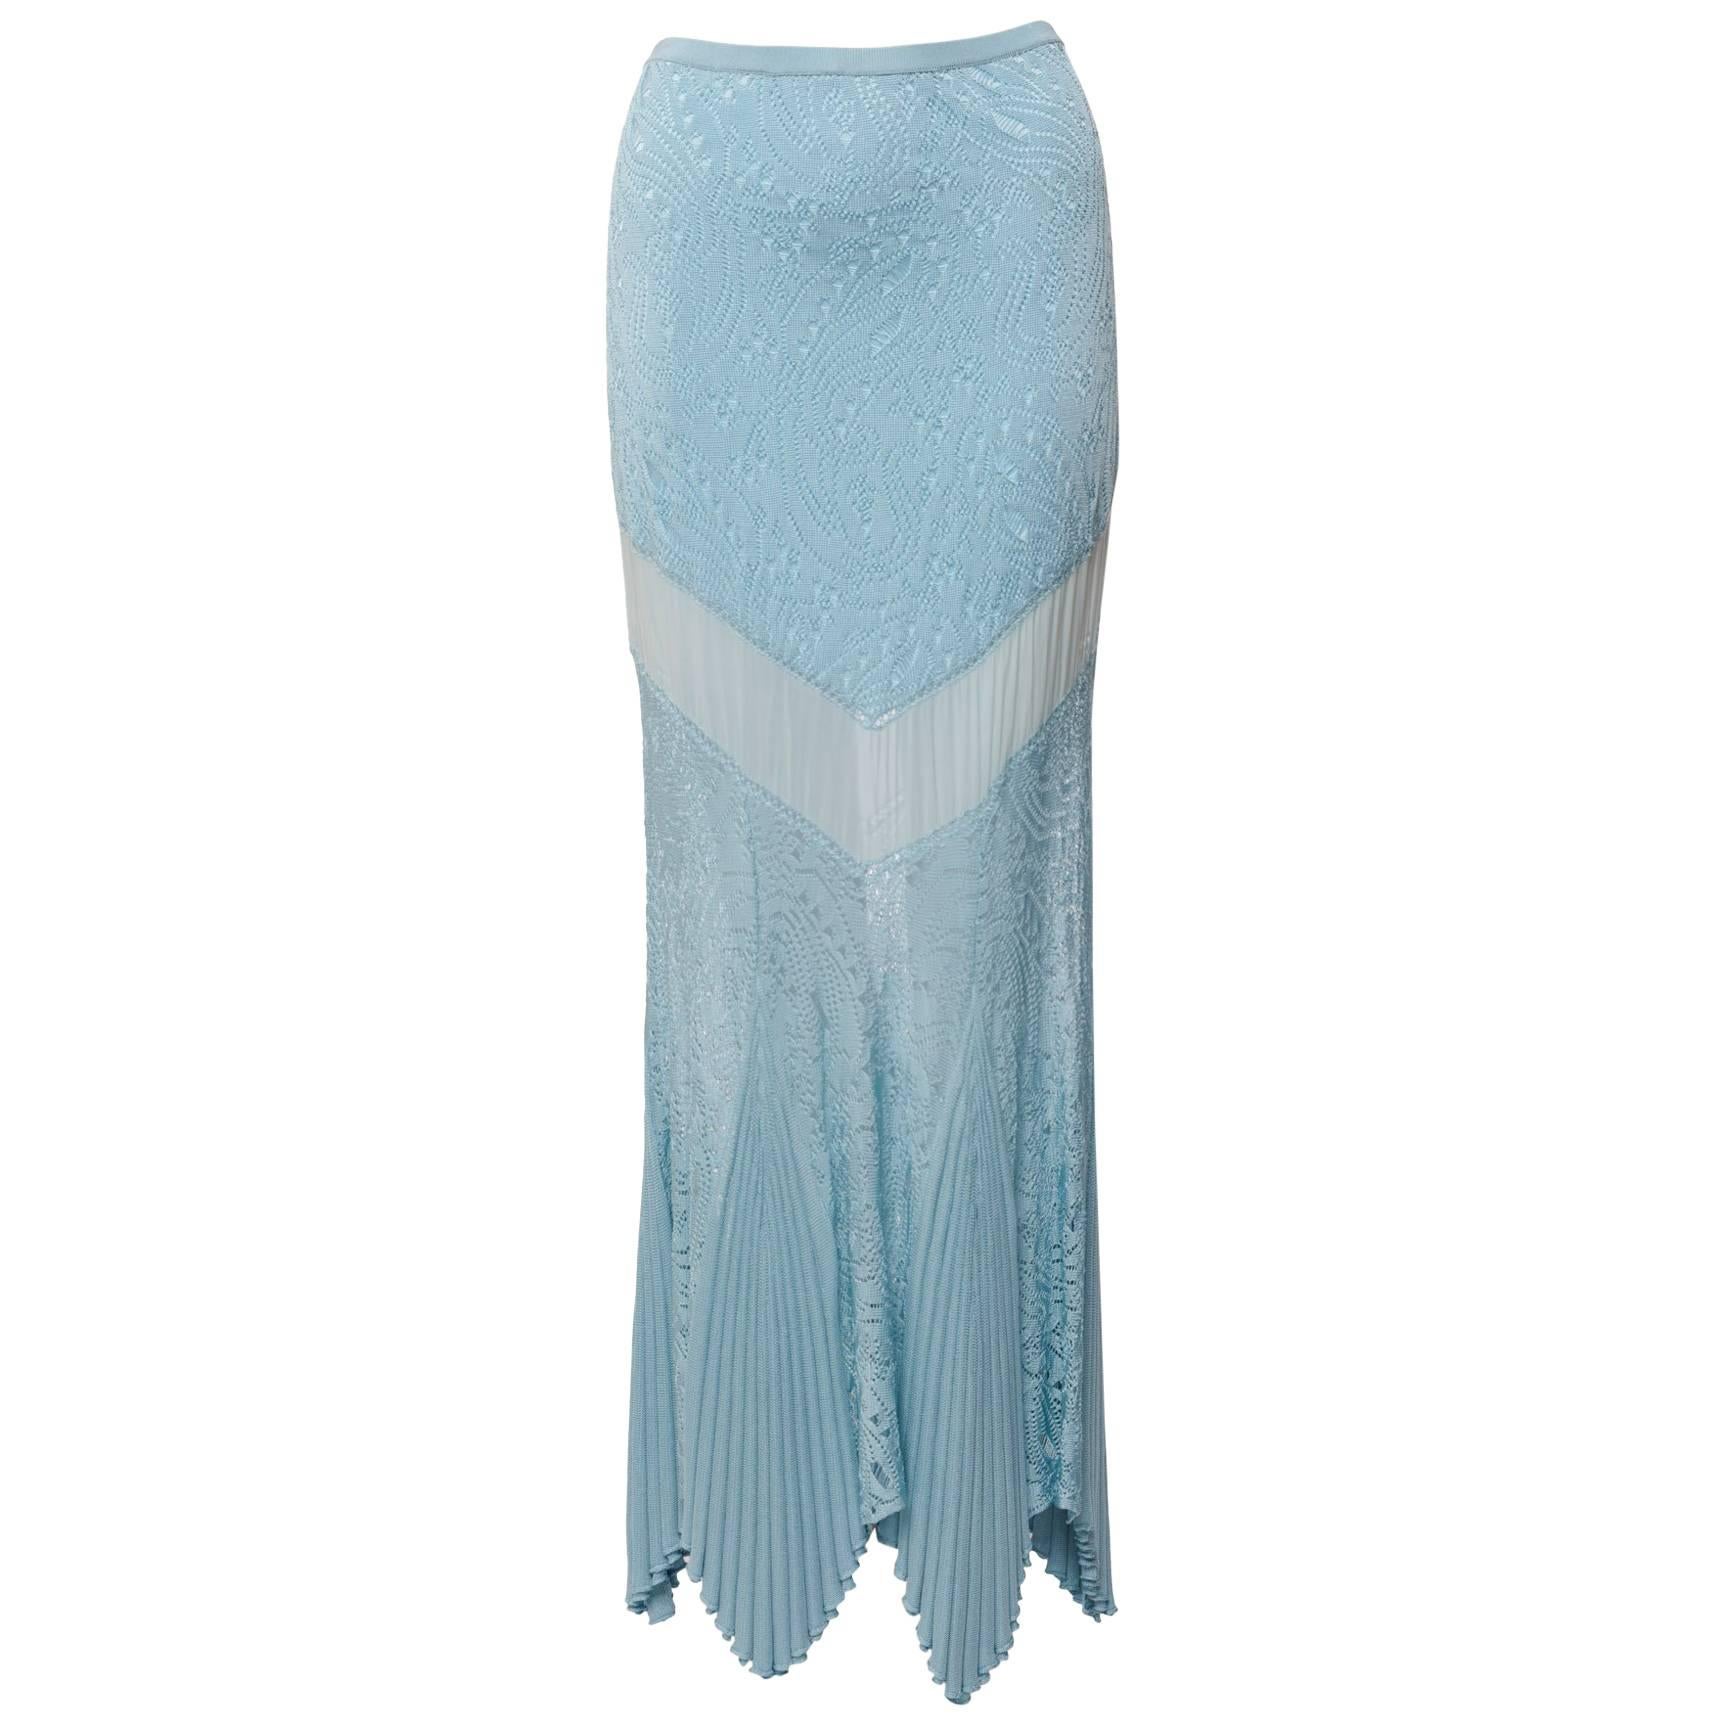 Christian Dior by Galliano Powder Blue Knit Lace  Silk Inset Mermaid Skirt